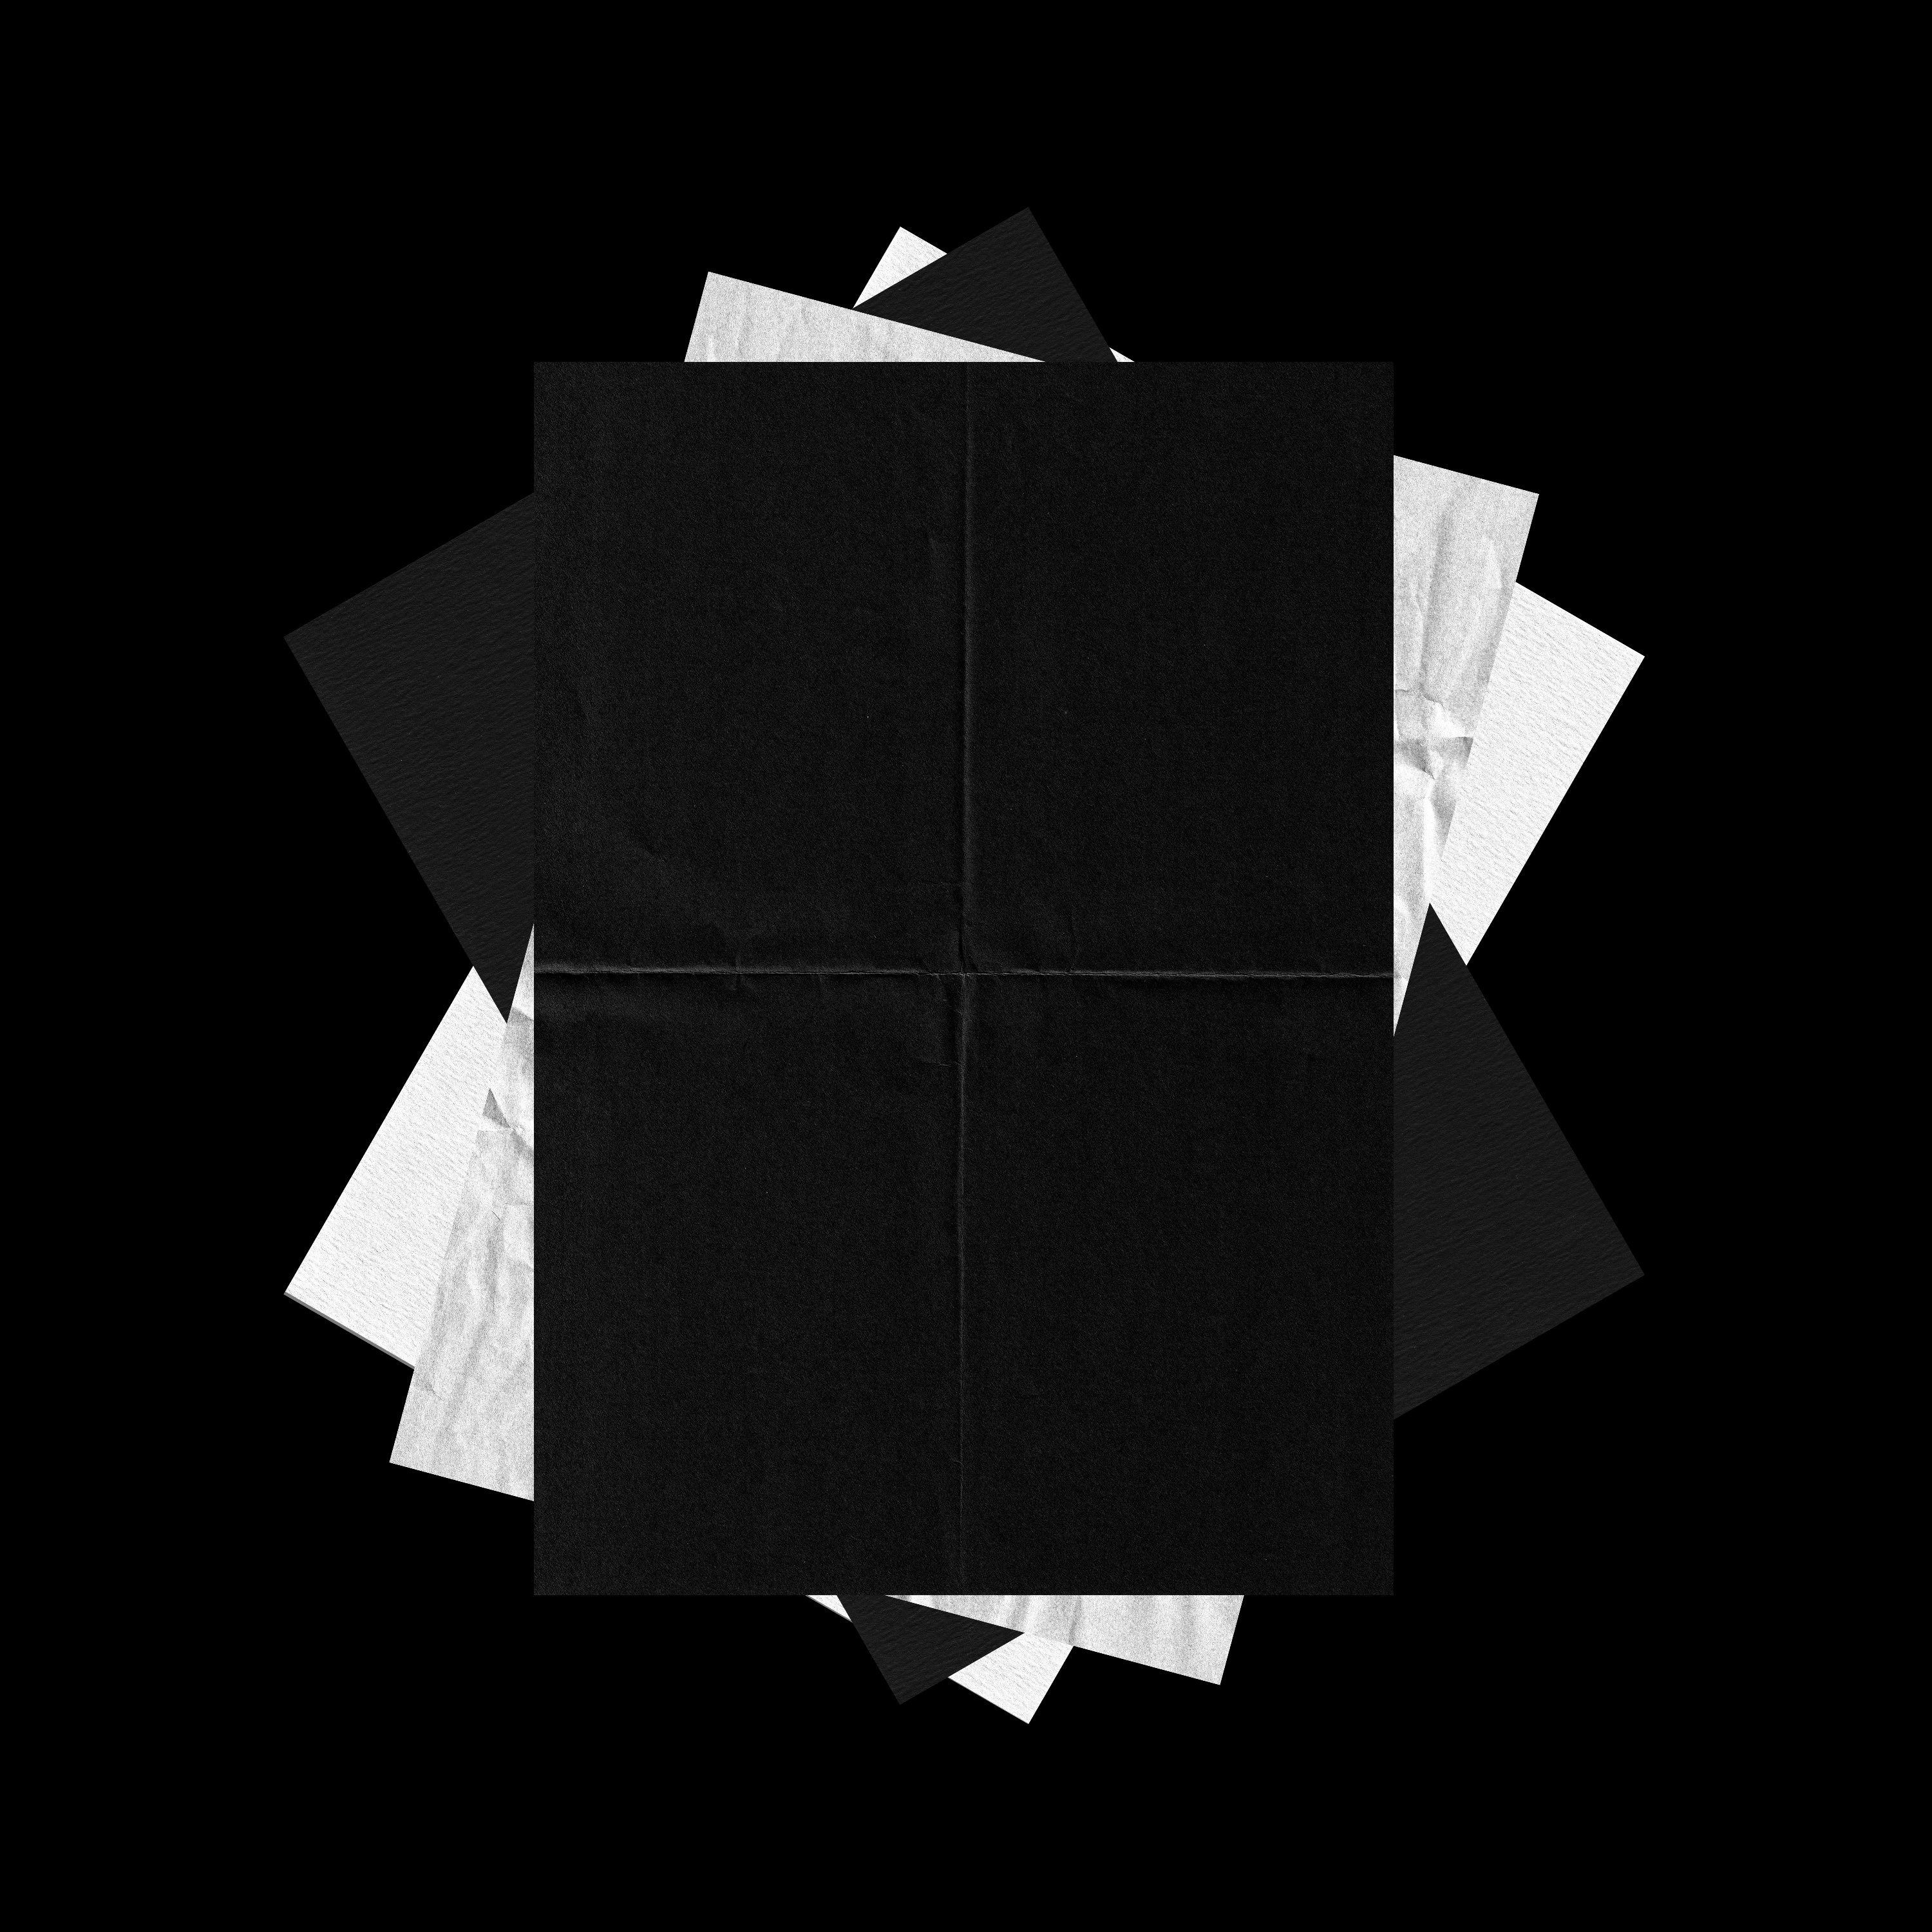 1288 4款褶皱纸张纹理背景素材 Luke Ellis – Paper Textures Pack